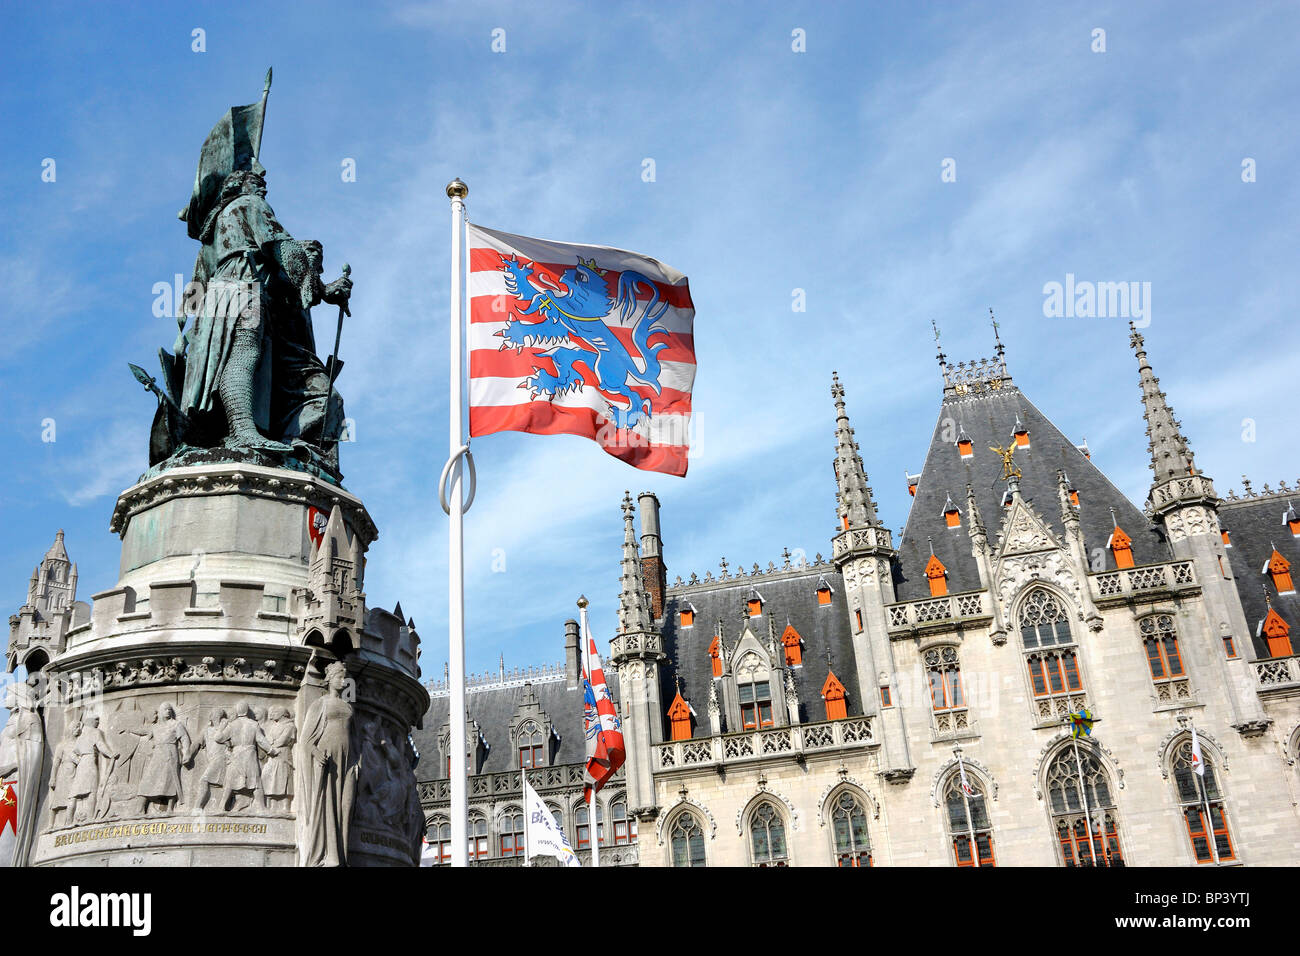 Statua di Jan Breydel e Pieter De Coninck davanti al Palazzo Provinciale House, la piazza del mercato di Bruges, Belgio Foto Stock